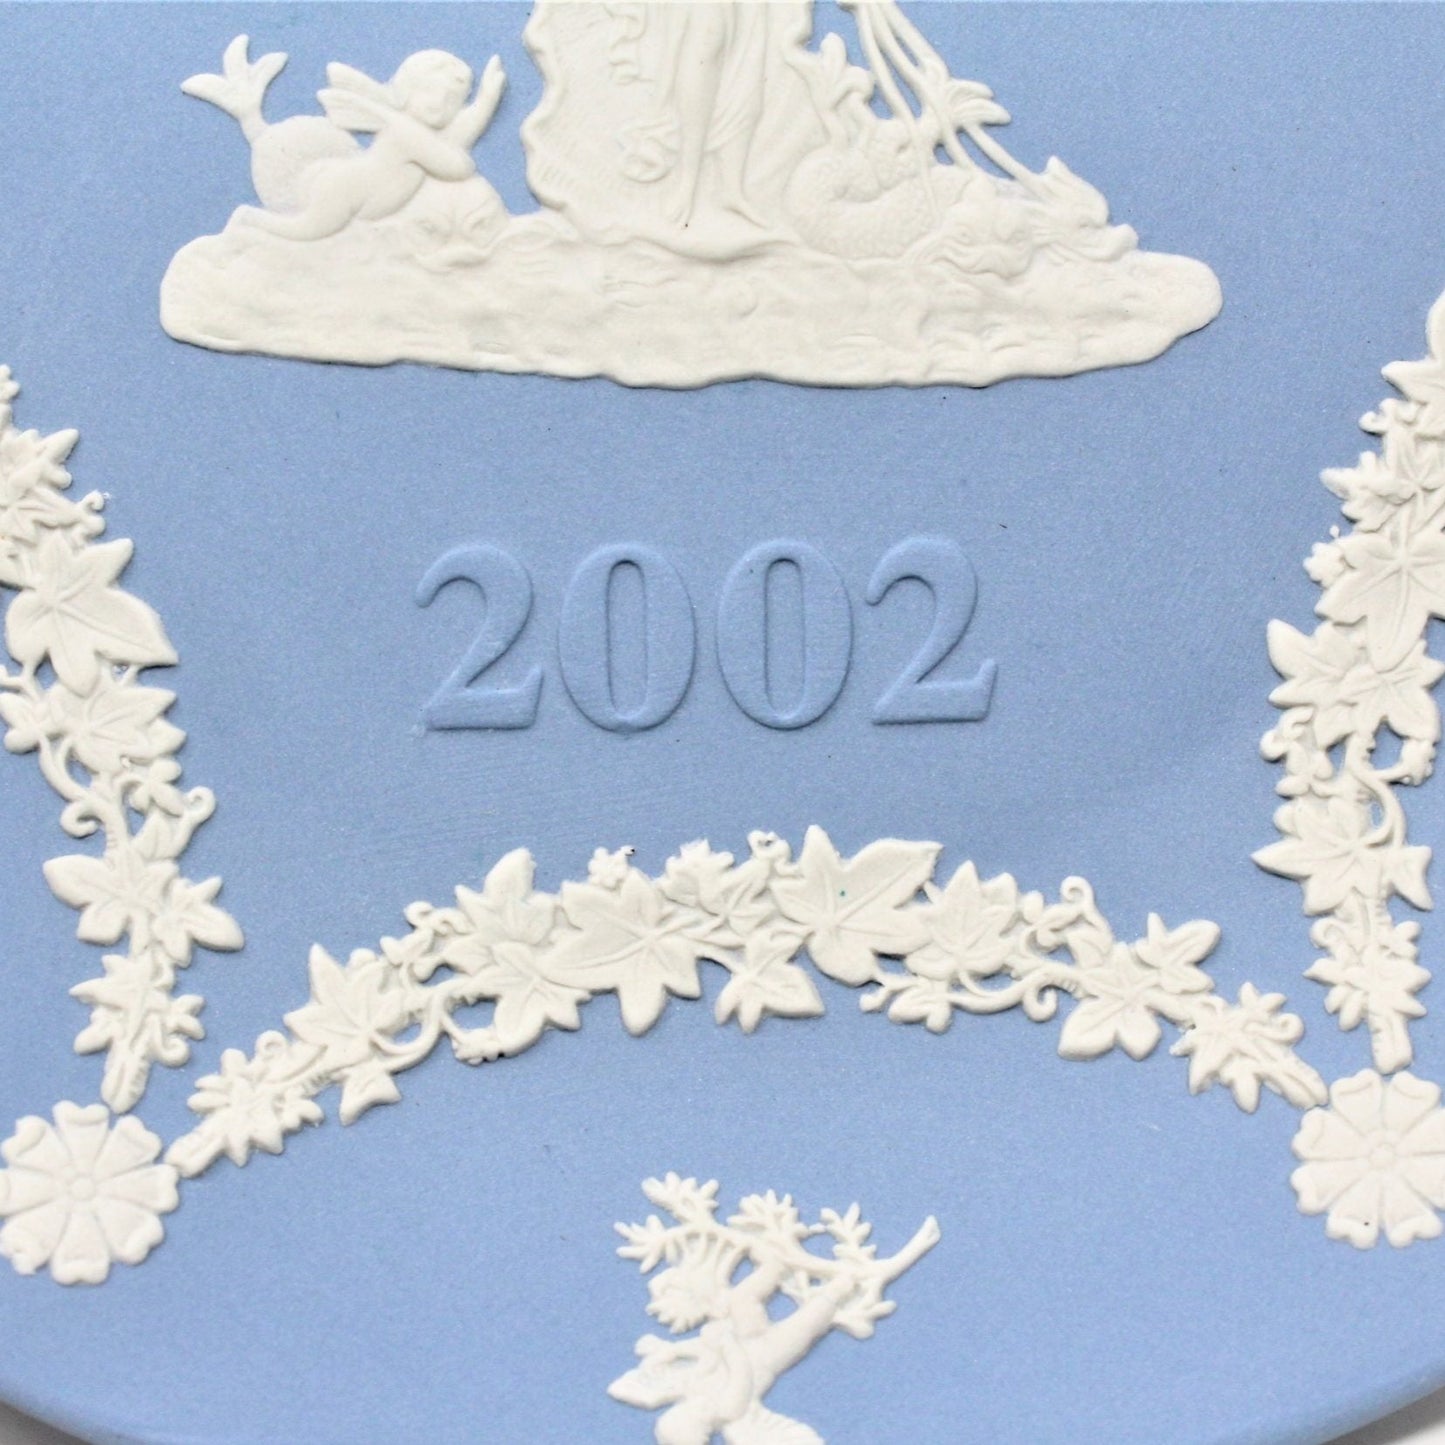 Decorative Plate, Blue Jasperware, Wedgwood, Amphitrite, 2002